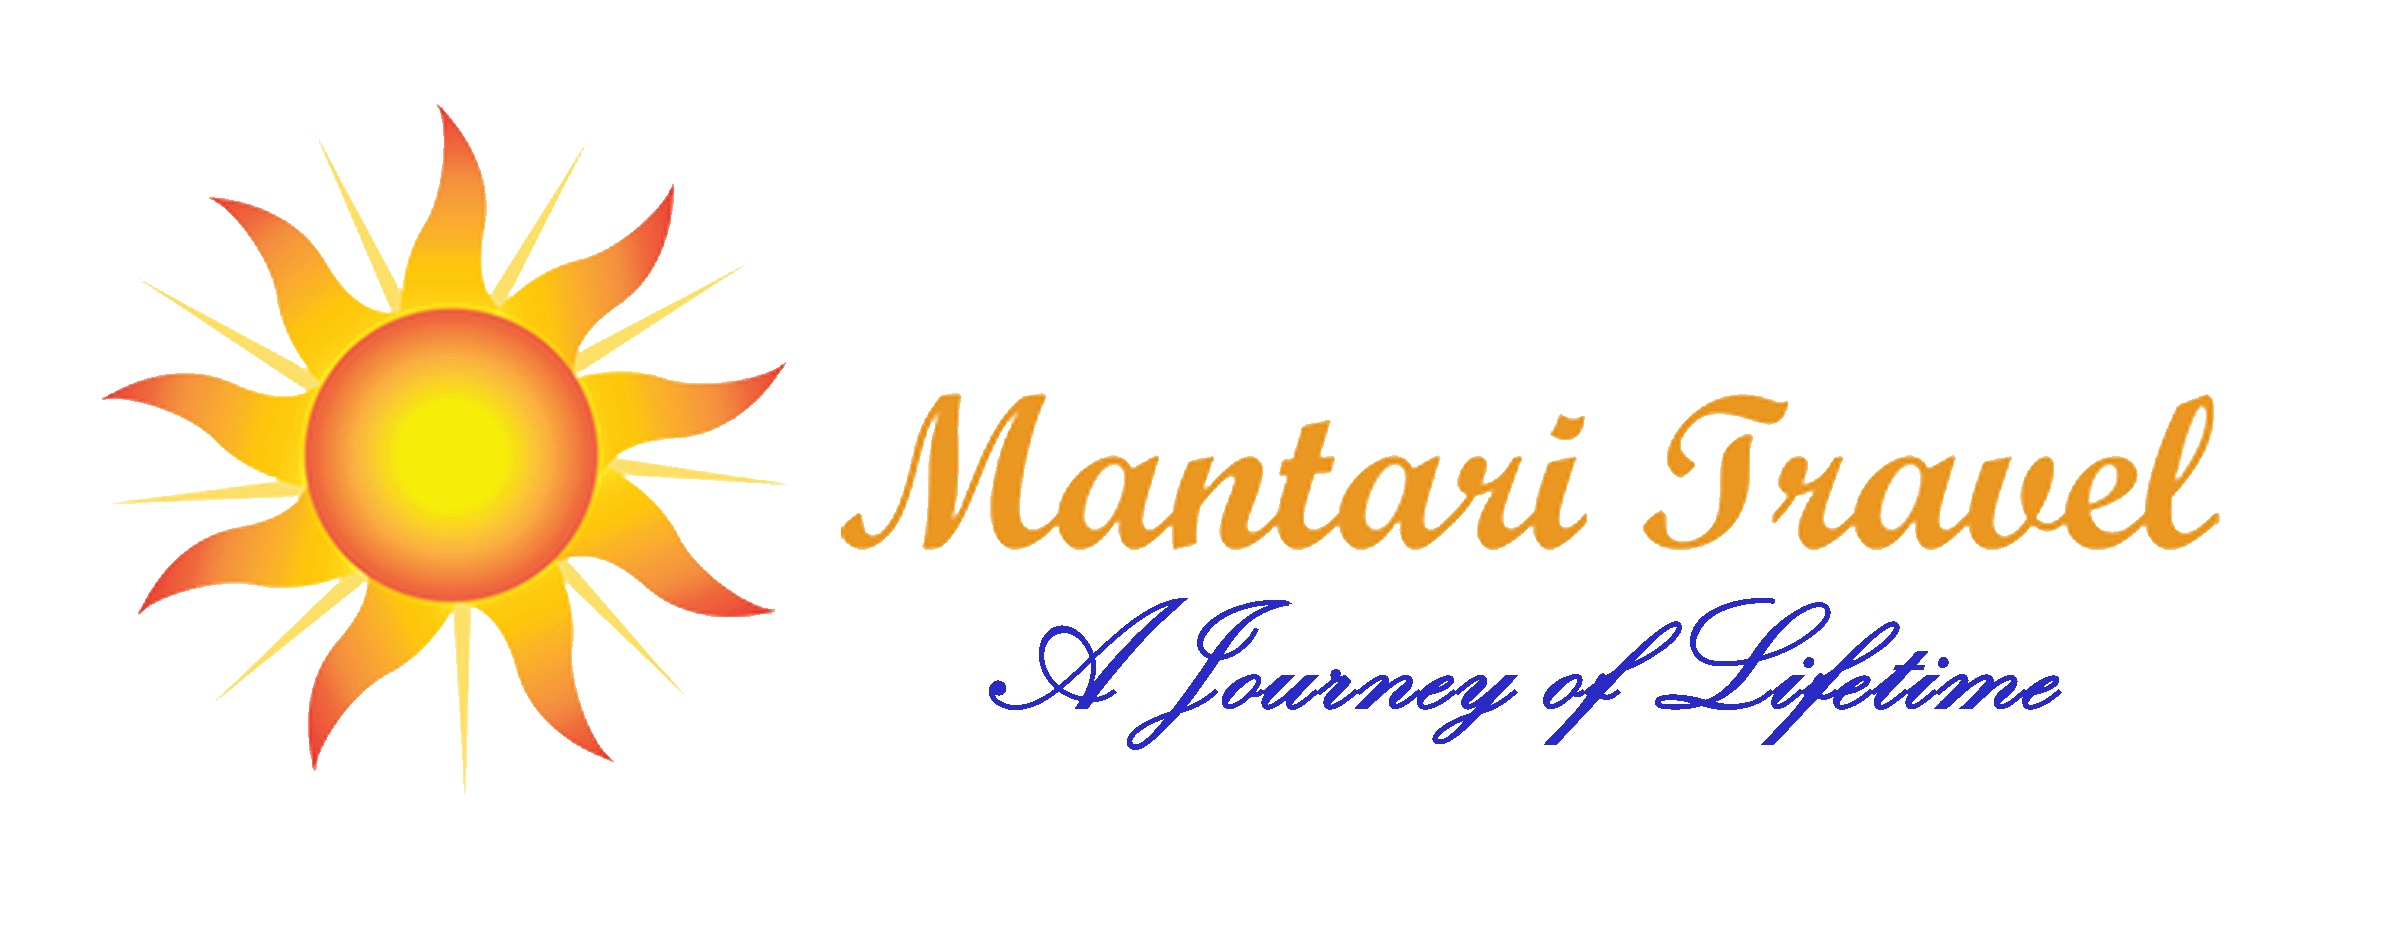 Travel.com Logo - Contact Us | Mantari Travel